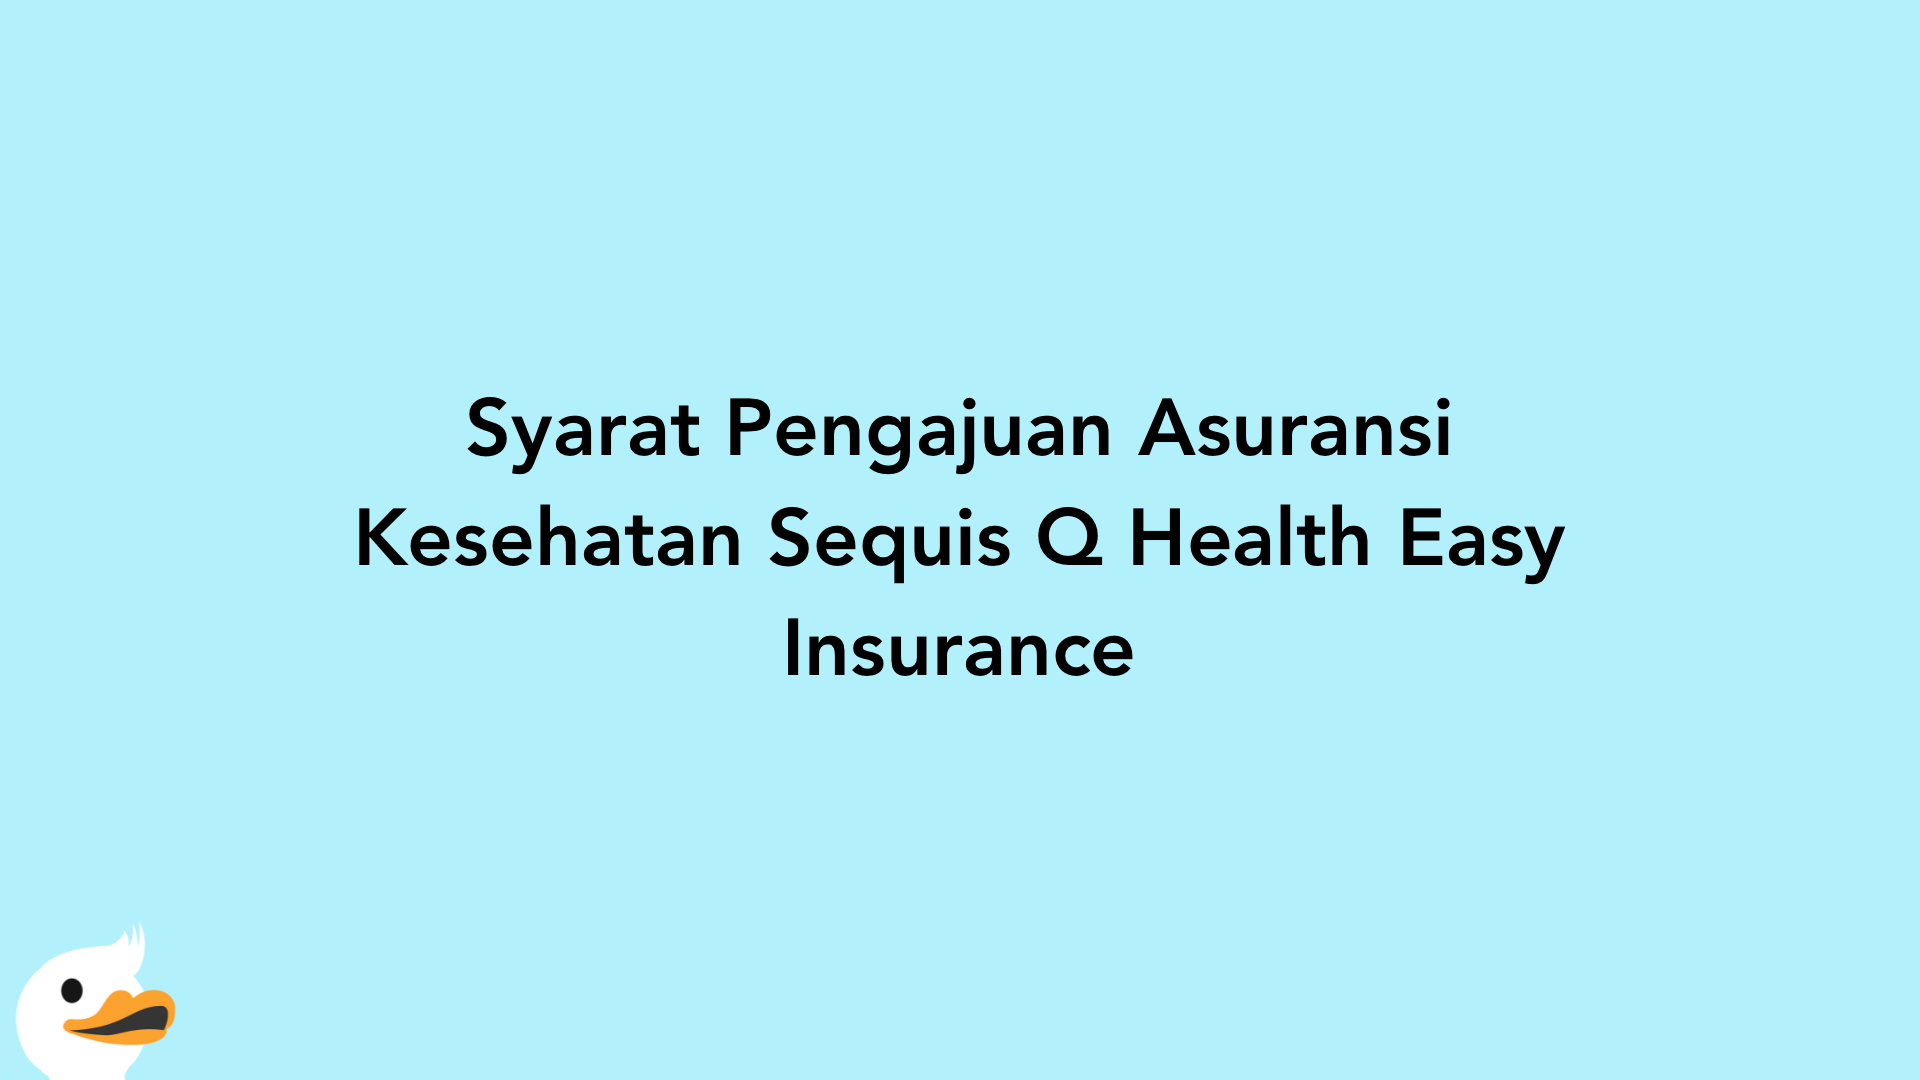 Syarat Pengajuan Asuransi Kesehatan Sequis Q Health Easy Insurance